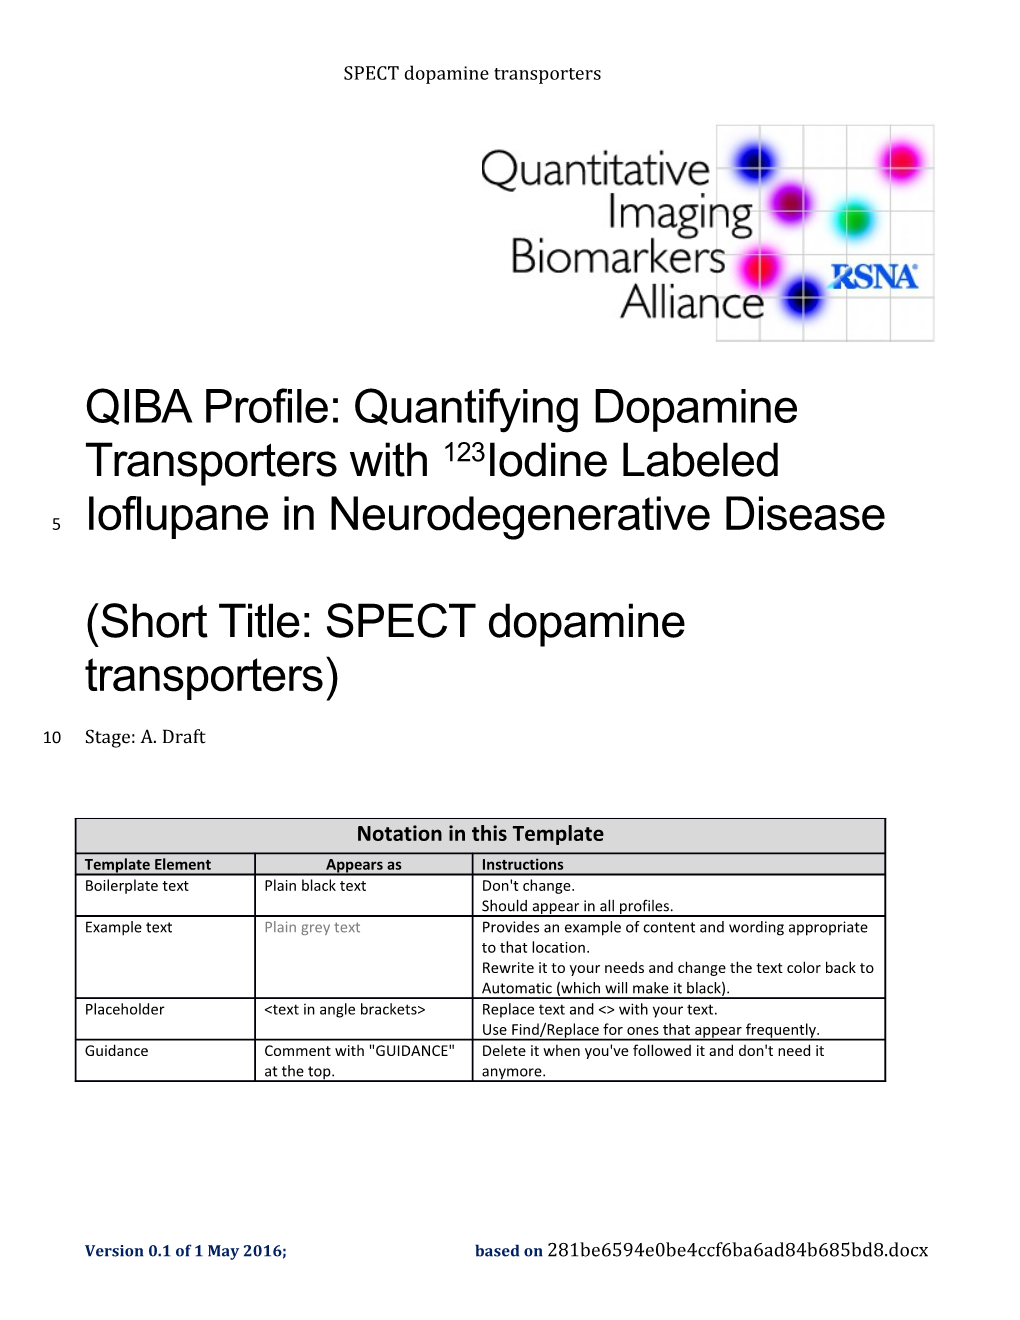 QIBA Profile: Quantifying Dopamine Transporters with 123Iodine Labeled Ioflupane In s1